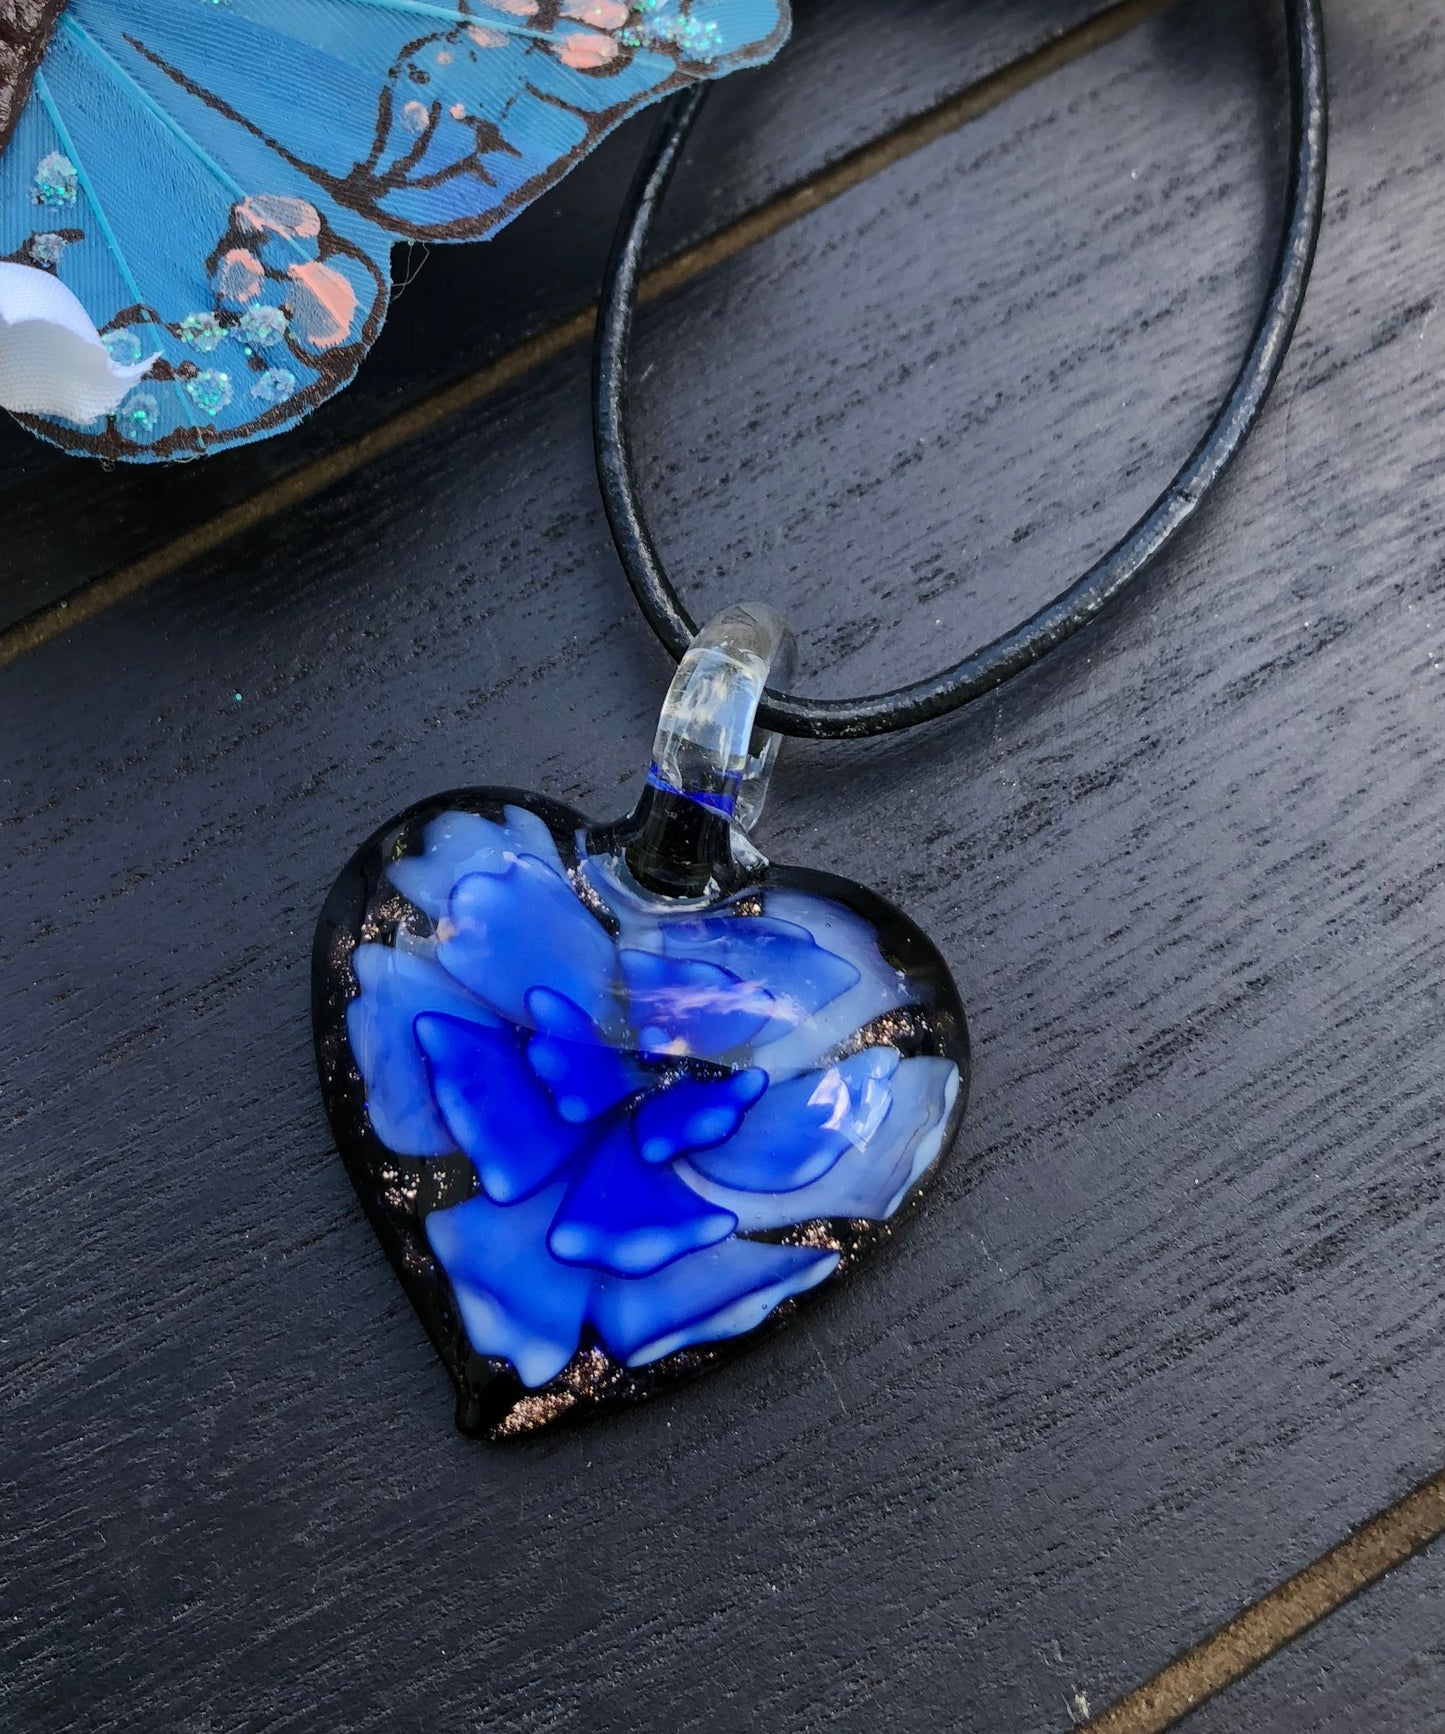 BESHEEK Handmade Murano Inspired Blown Glass Lampwork Art Royal Blue Murano Glass Flower Heart Pendant Necklace? Handcrafted Artisan Hypoallergenic Italian Style Jewelry